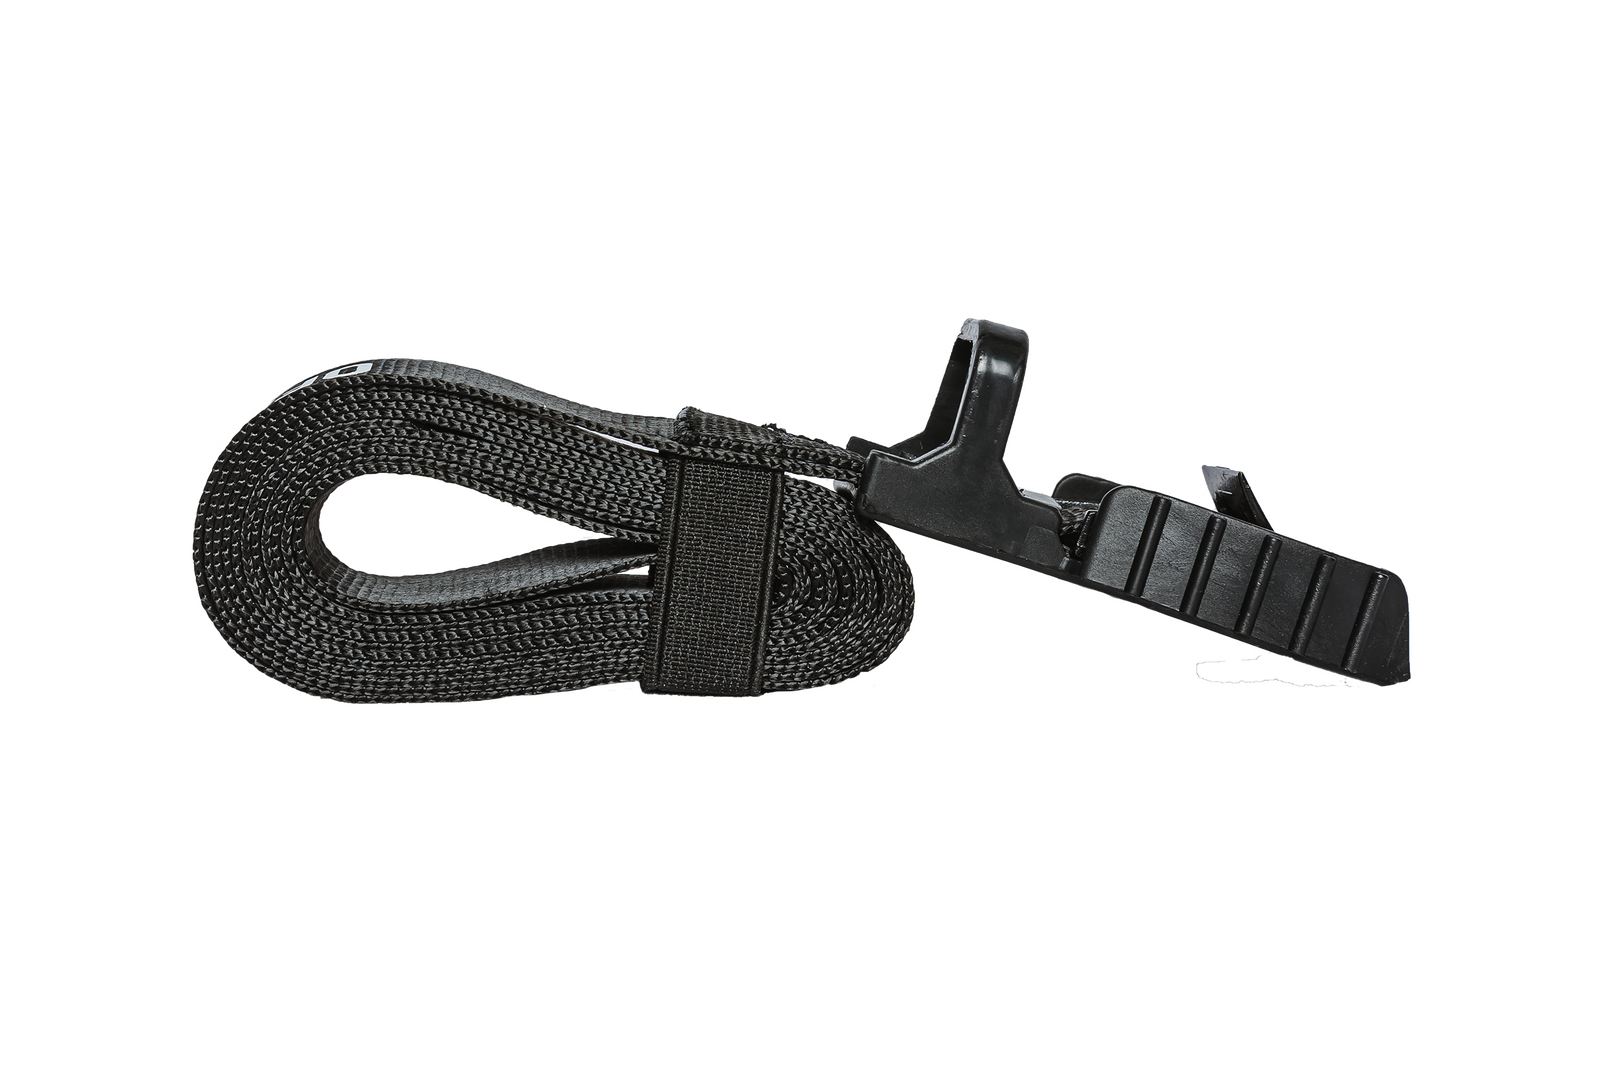 AllSpark 25mm Cam buckle strap - 5.0M long